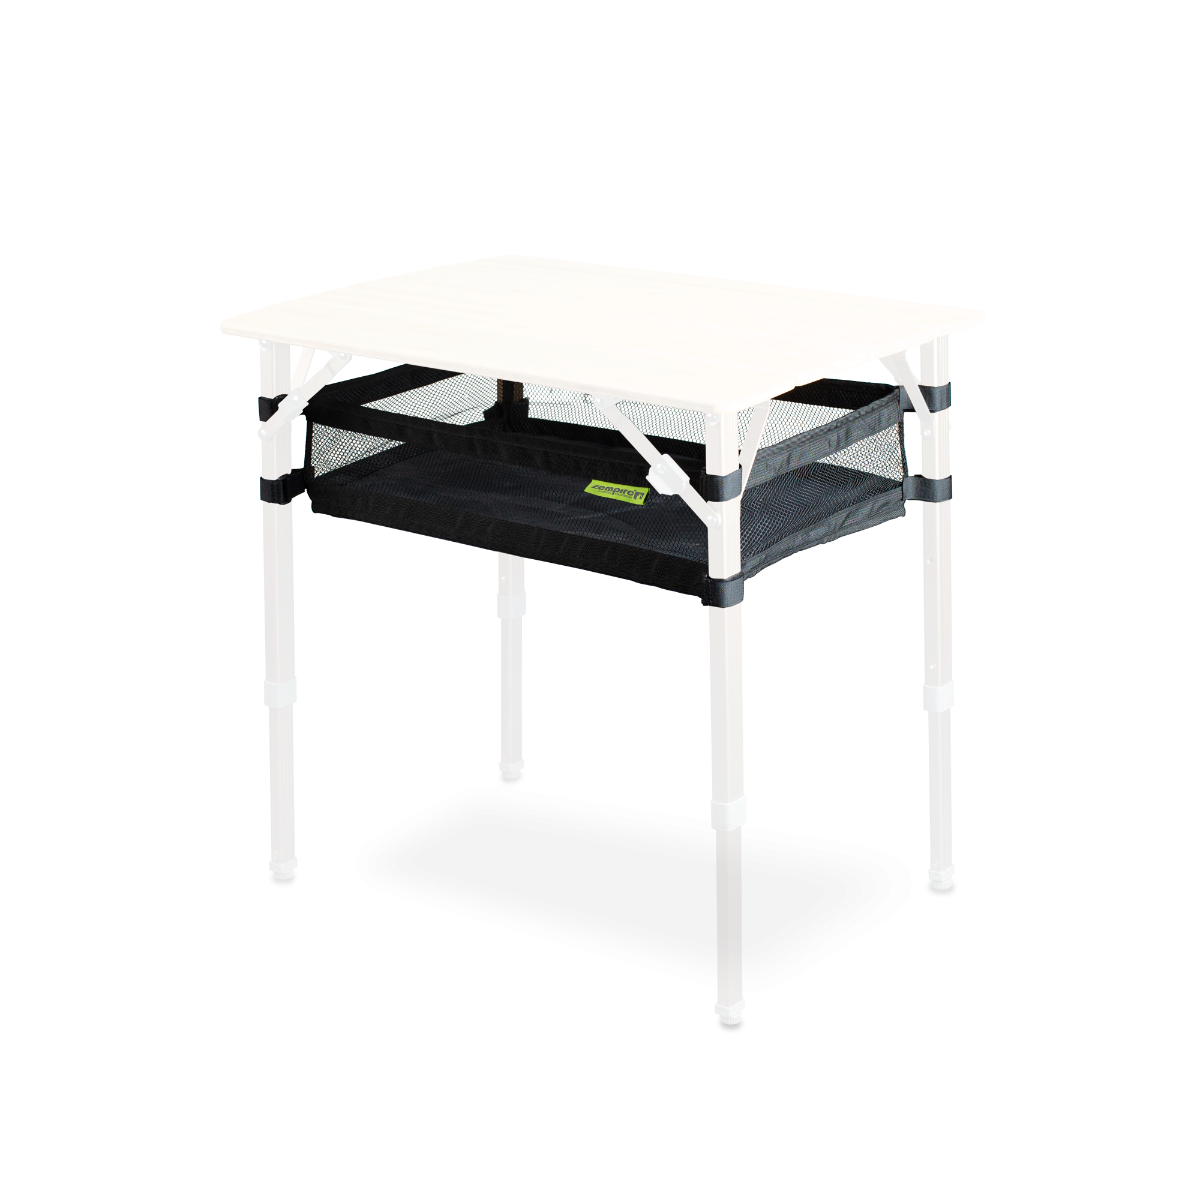 Zempire Kitpac Standard Table Hammock